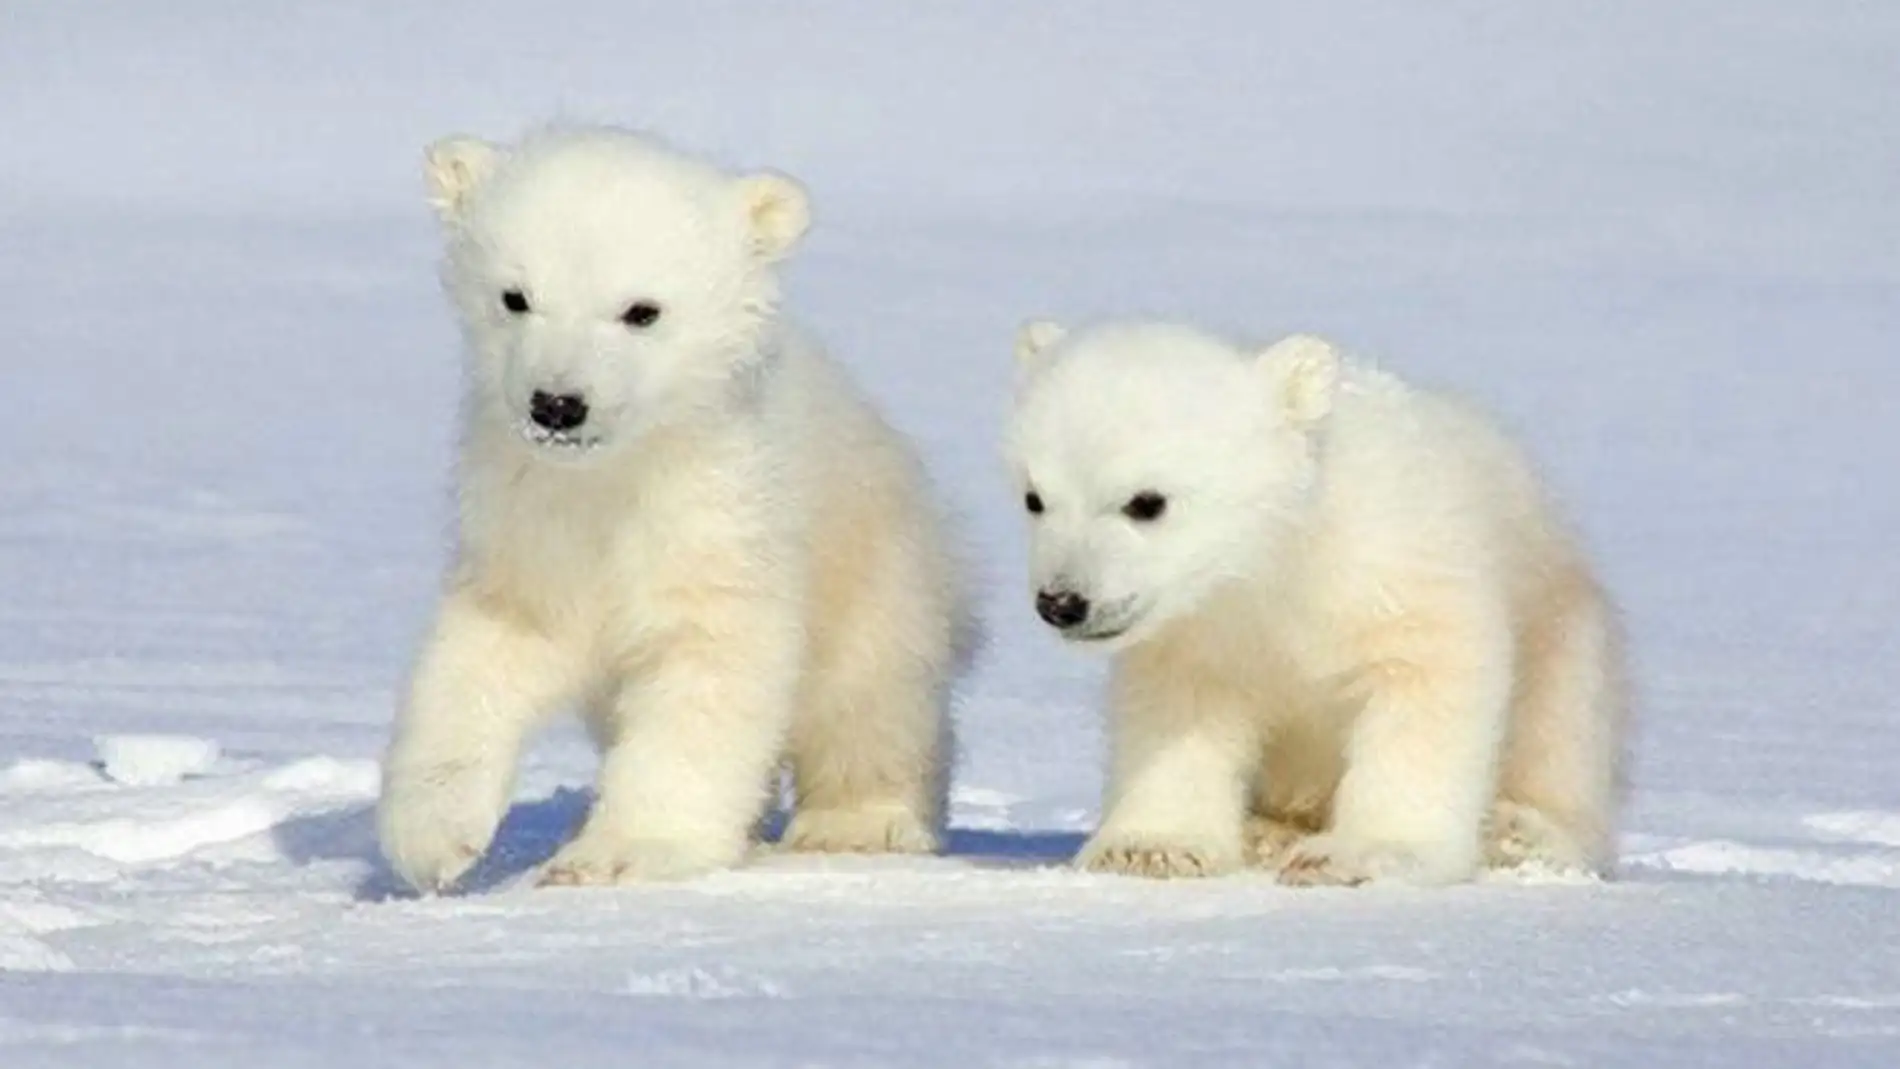 Animales polares